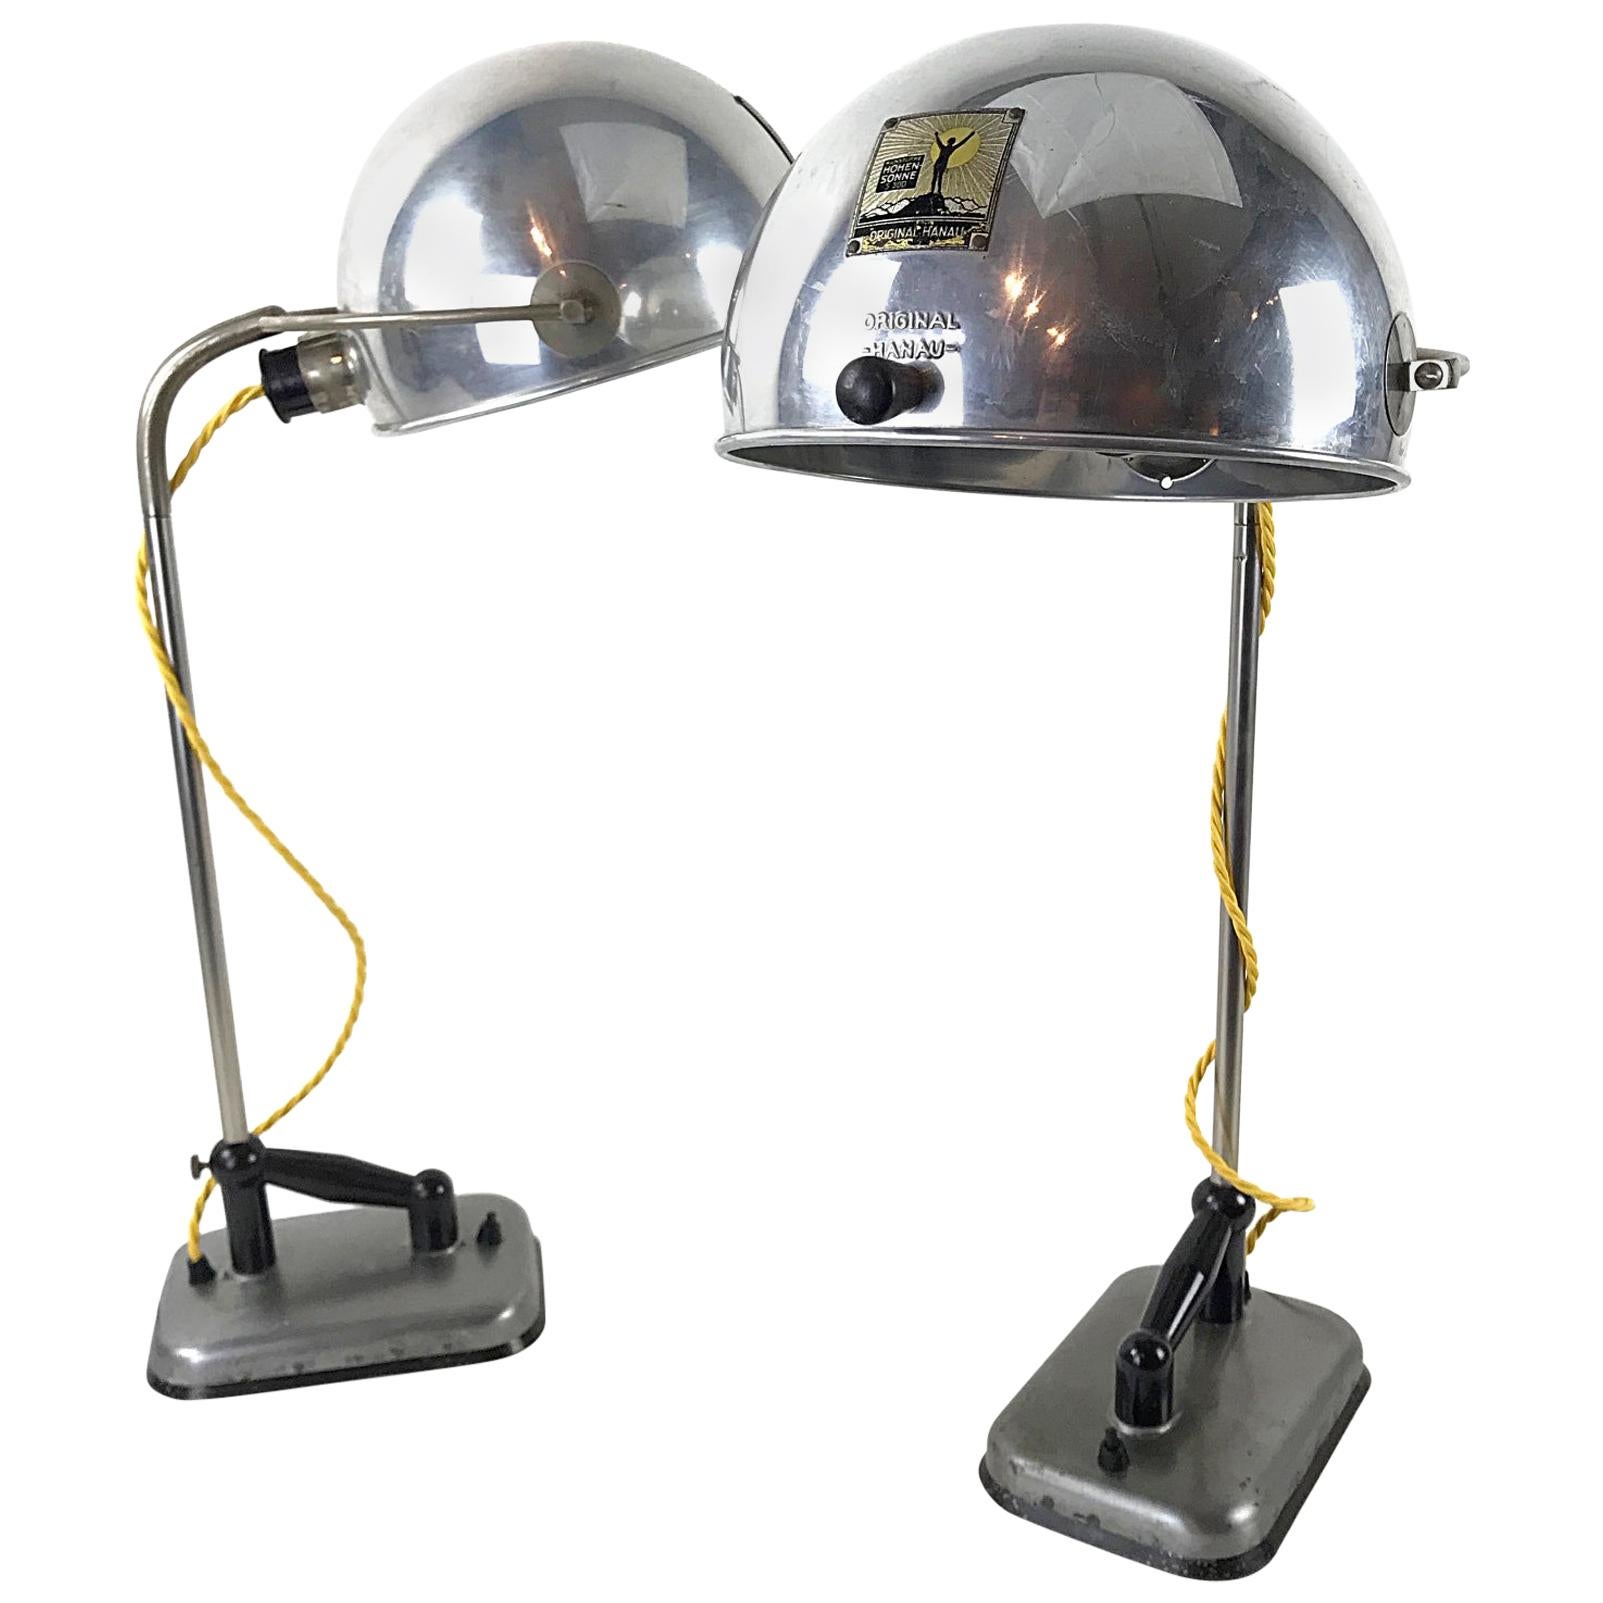 Original Hanau Bauhaus Globe Table Lamp, Alloy & Bakelit, 1930s, Germany